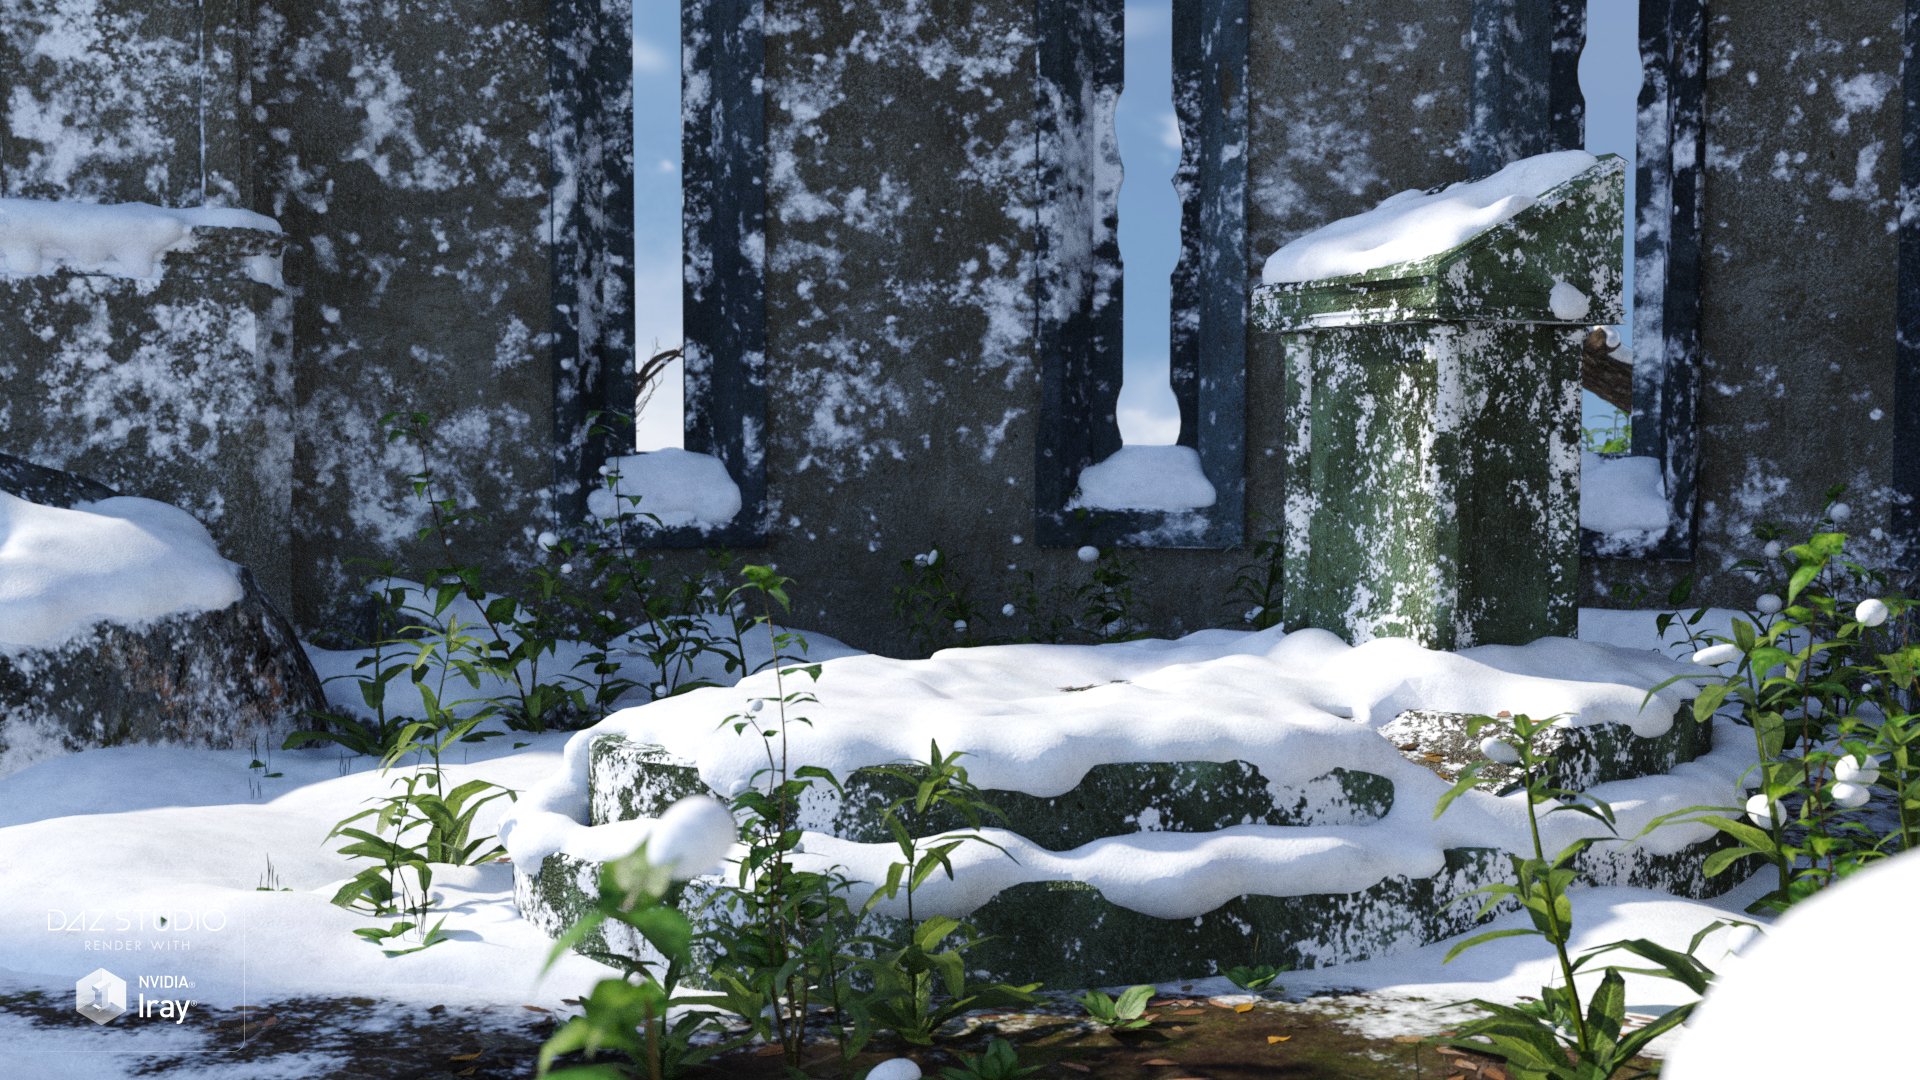 Ruins - The First Snow by: PeanterraAndrey Pestryakov, 3D Models by Daz 3D